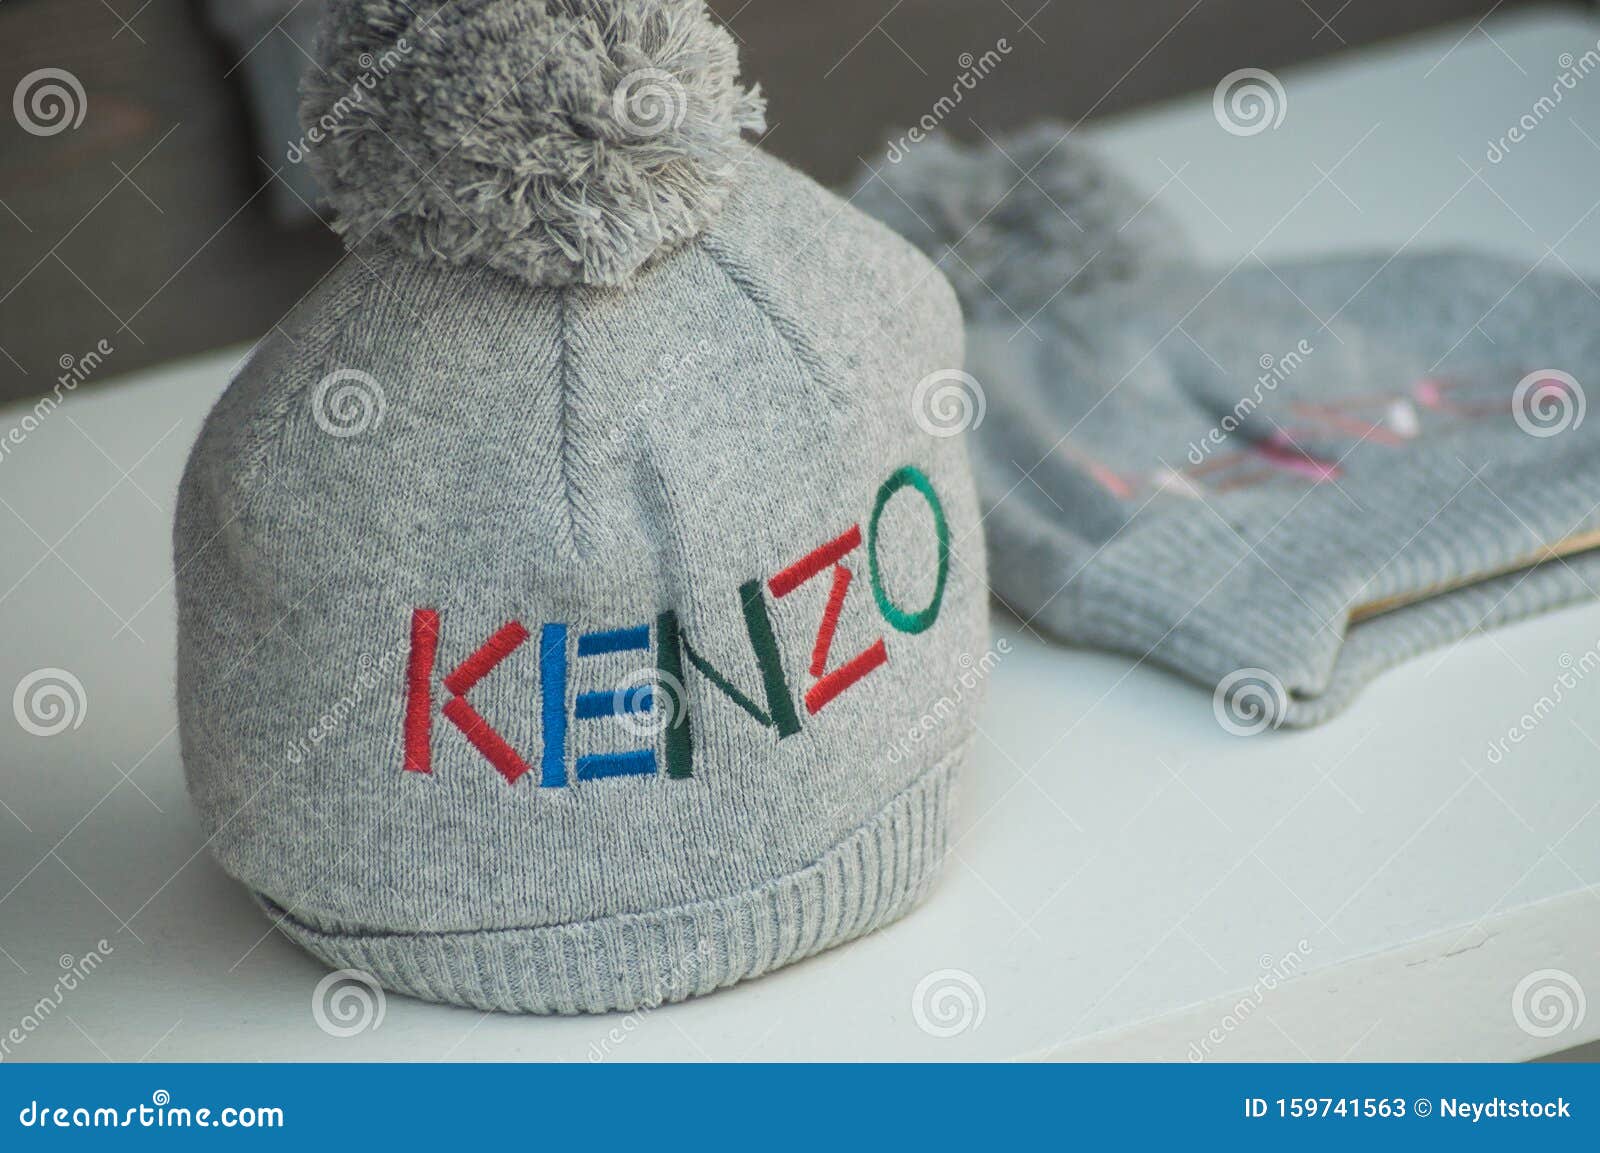 kenzo lvmh